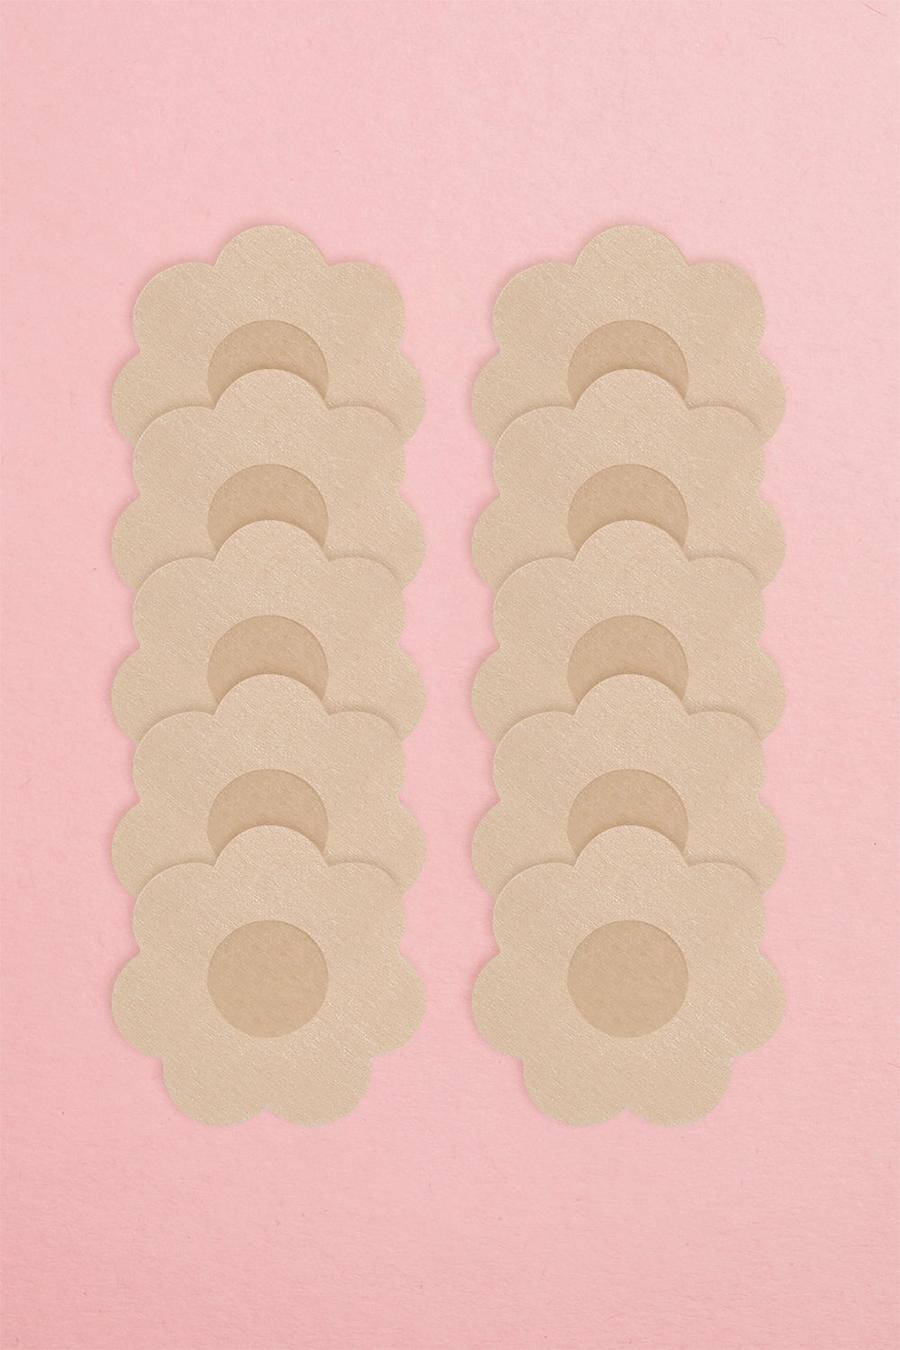 Boohoo Beauty - Copricapezzoli adesivi usa e getta a margherita - set di 5, Natural beige